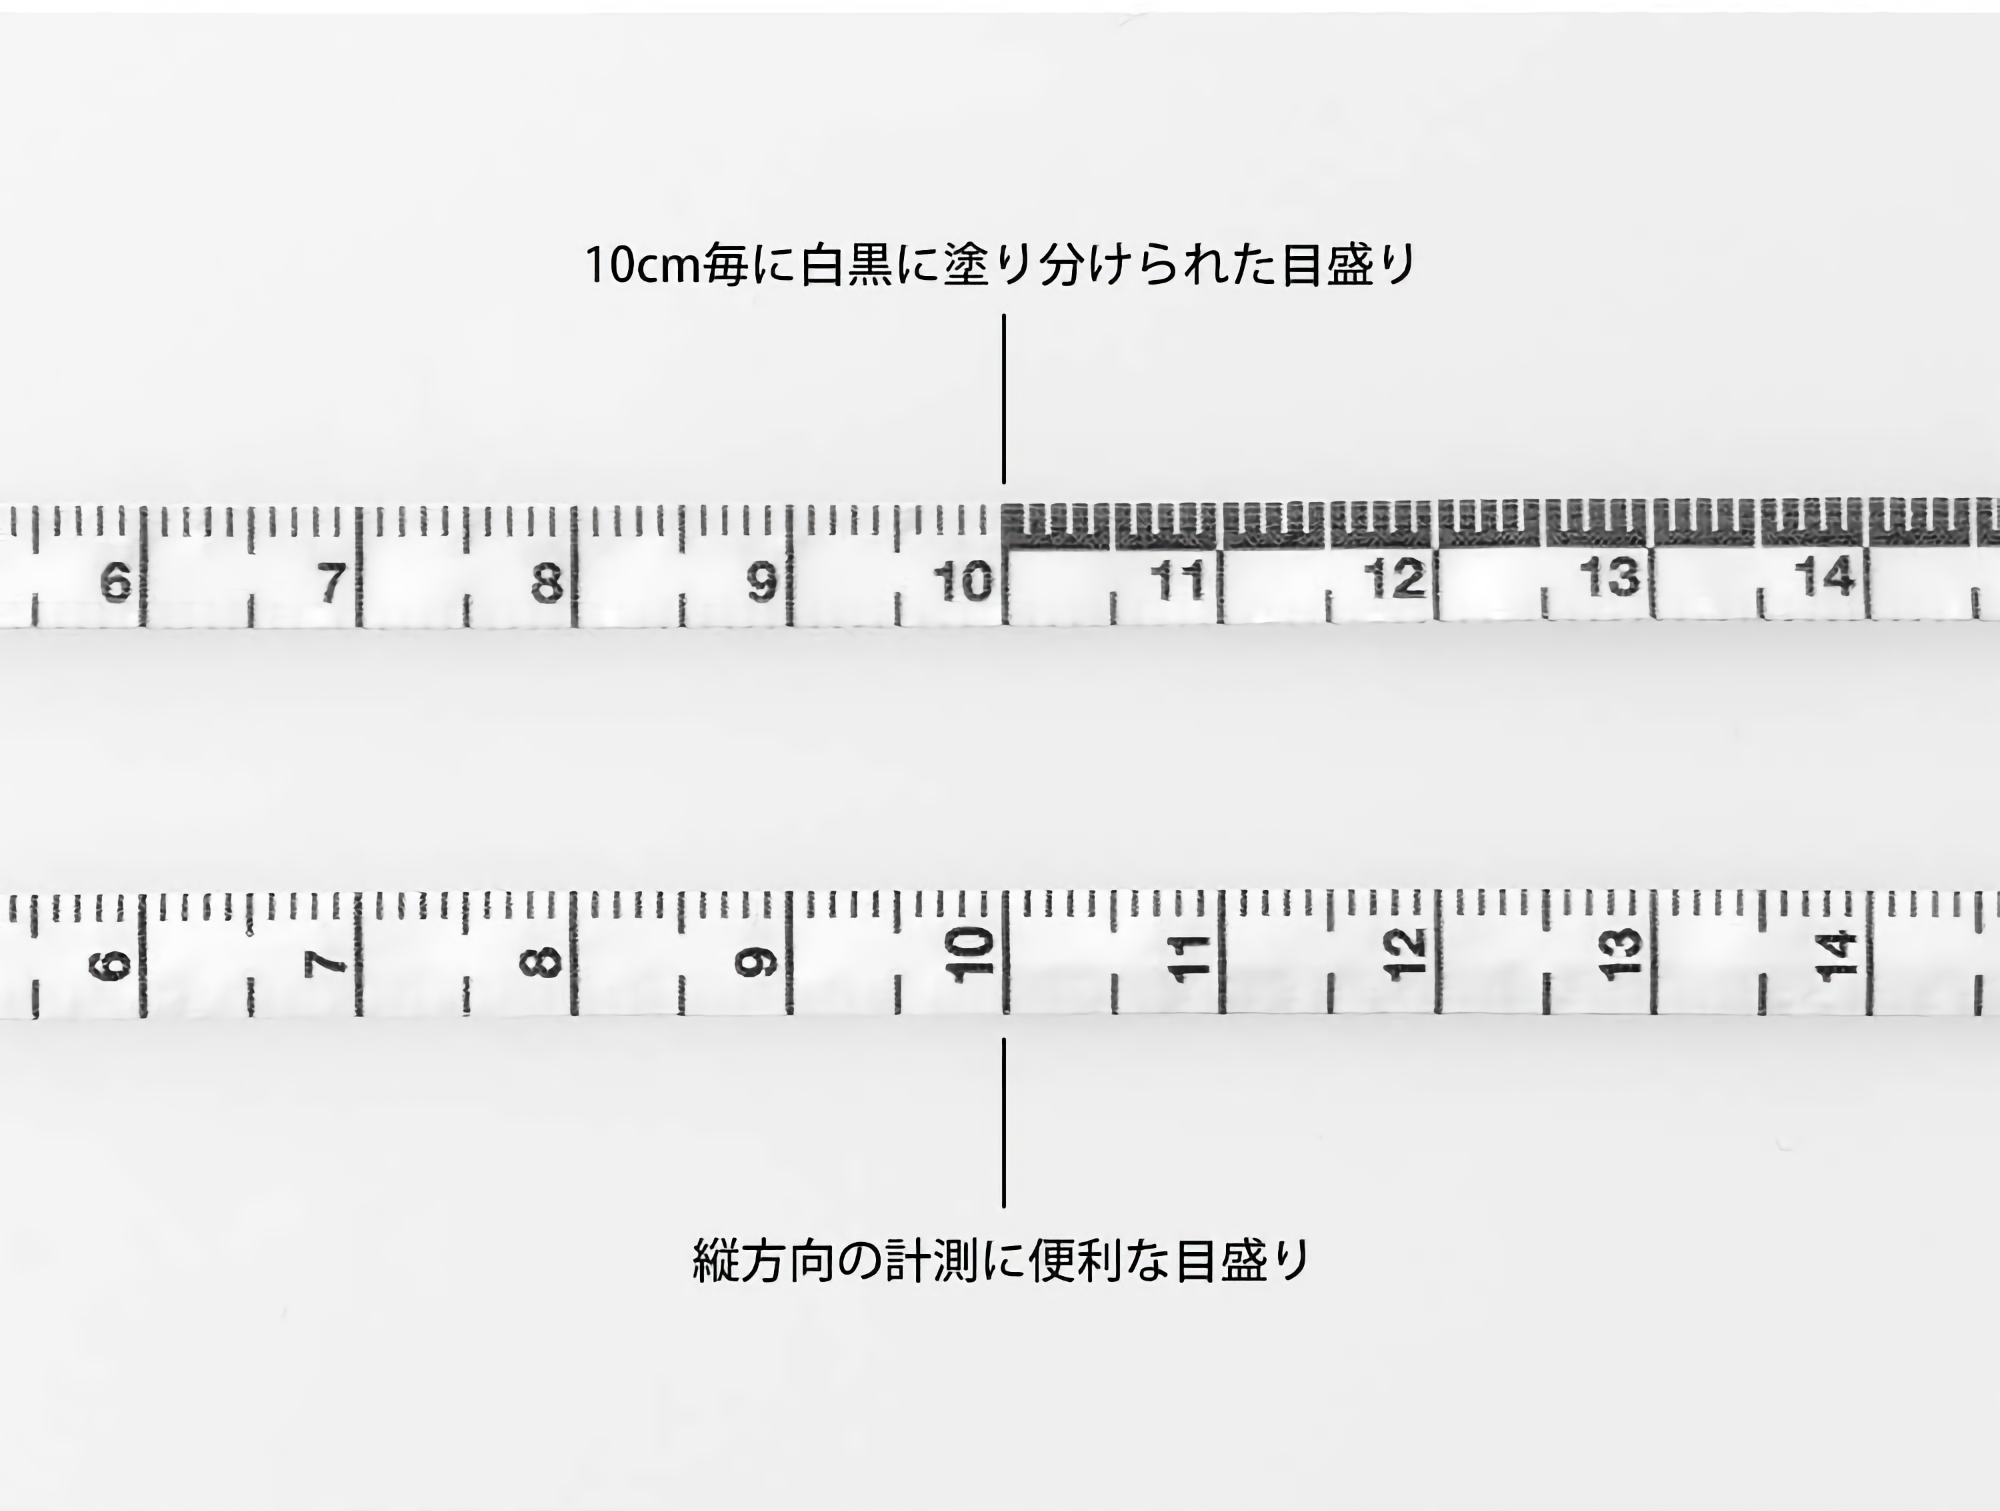 Midori XS Measure